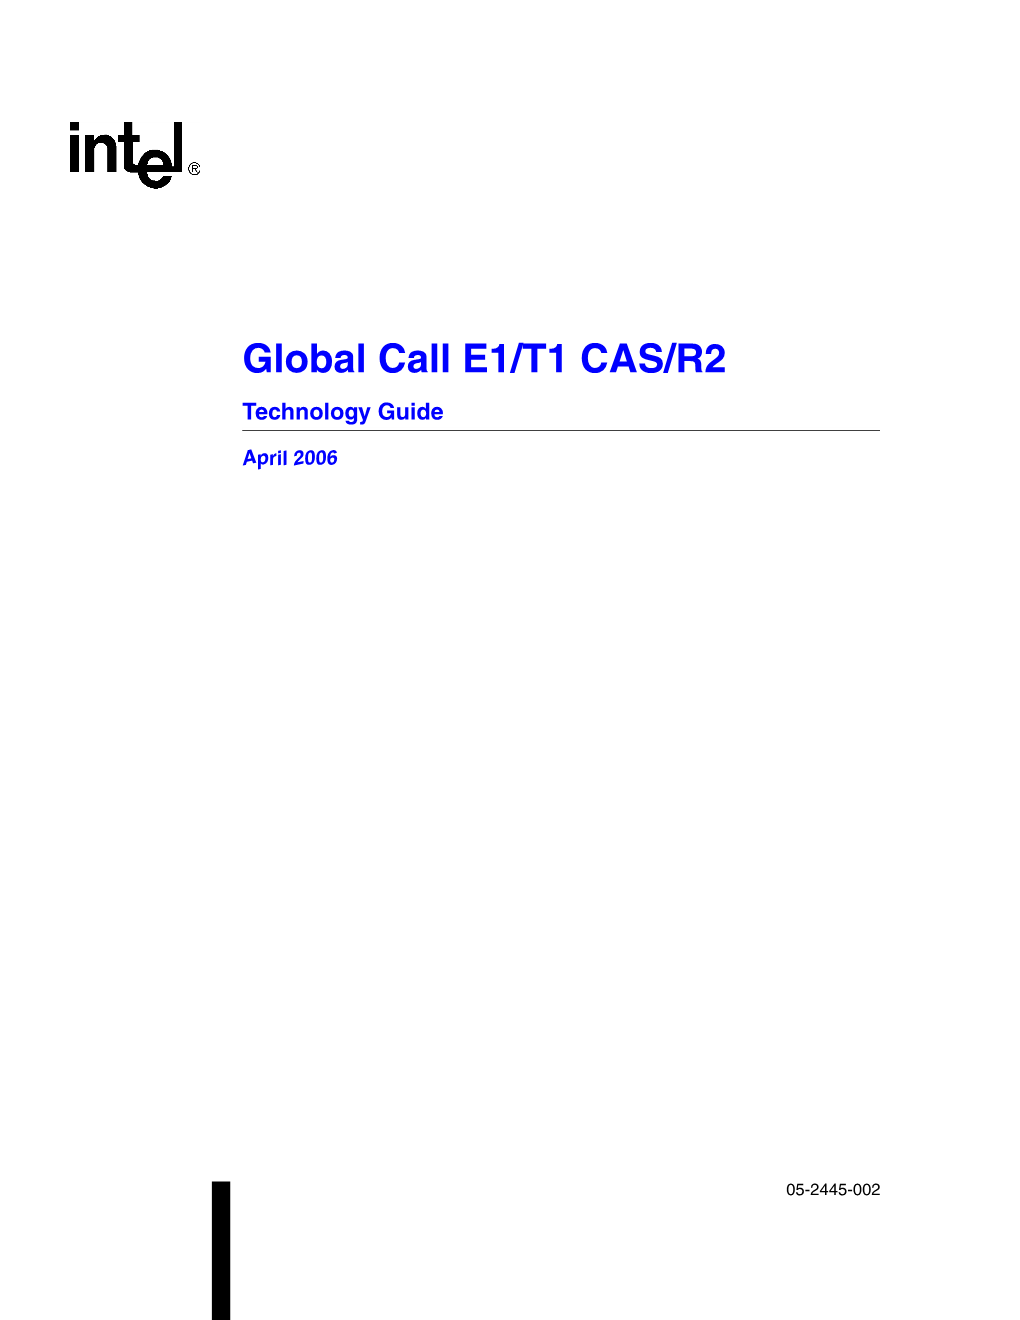 Global Call E1/T1 CAS/R2 Technology Guide